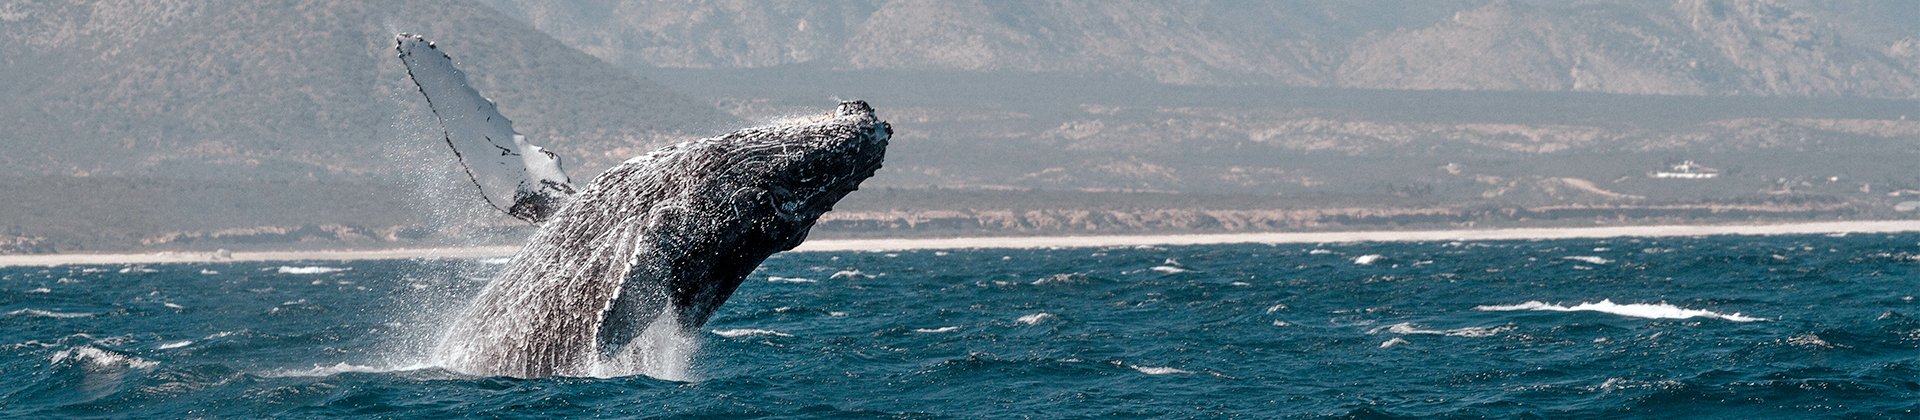 Whale Baja